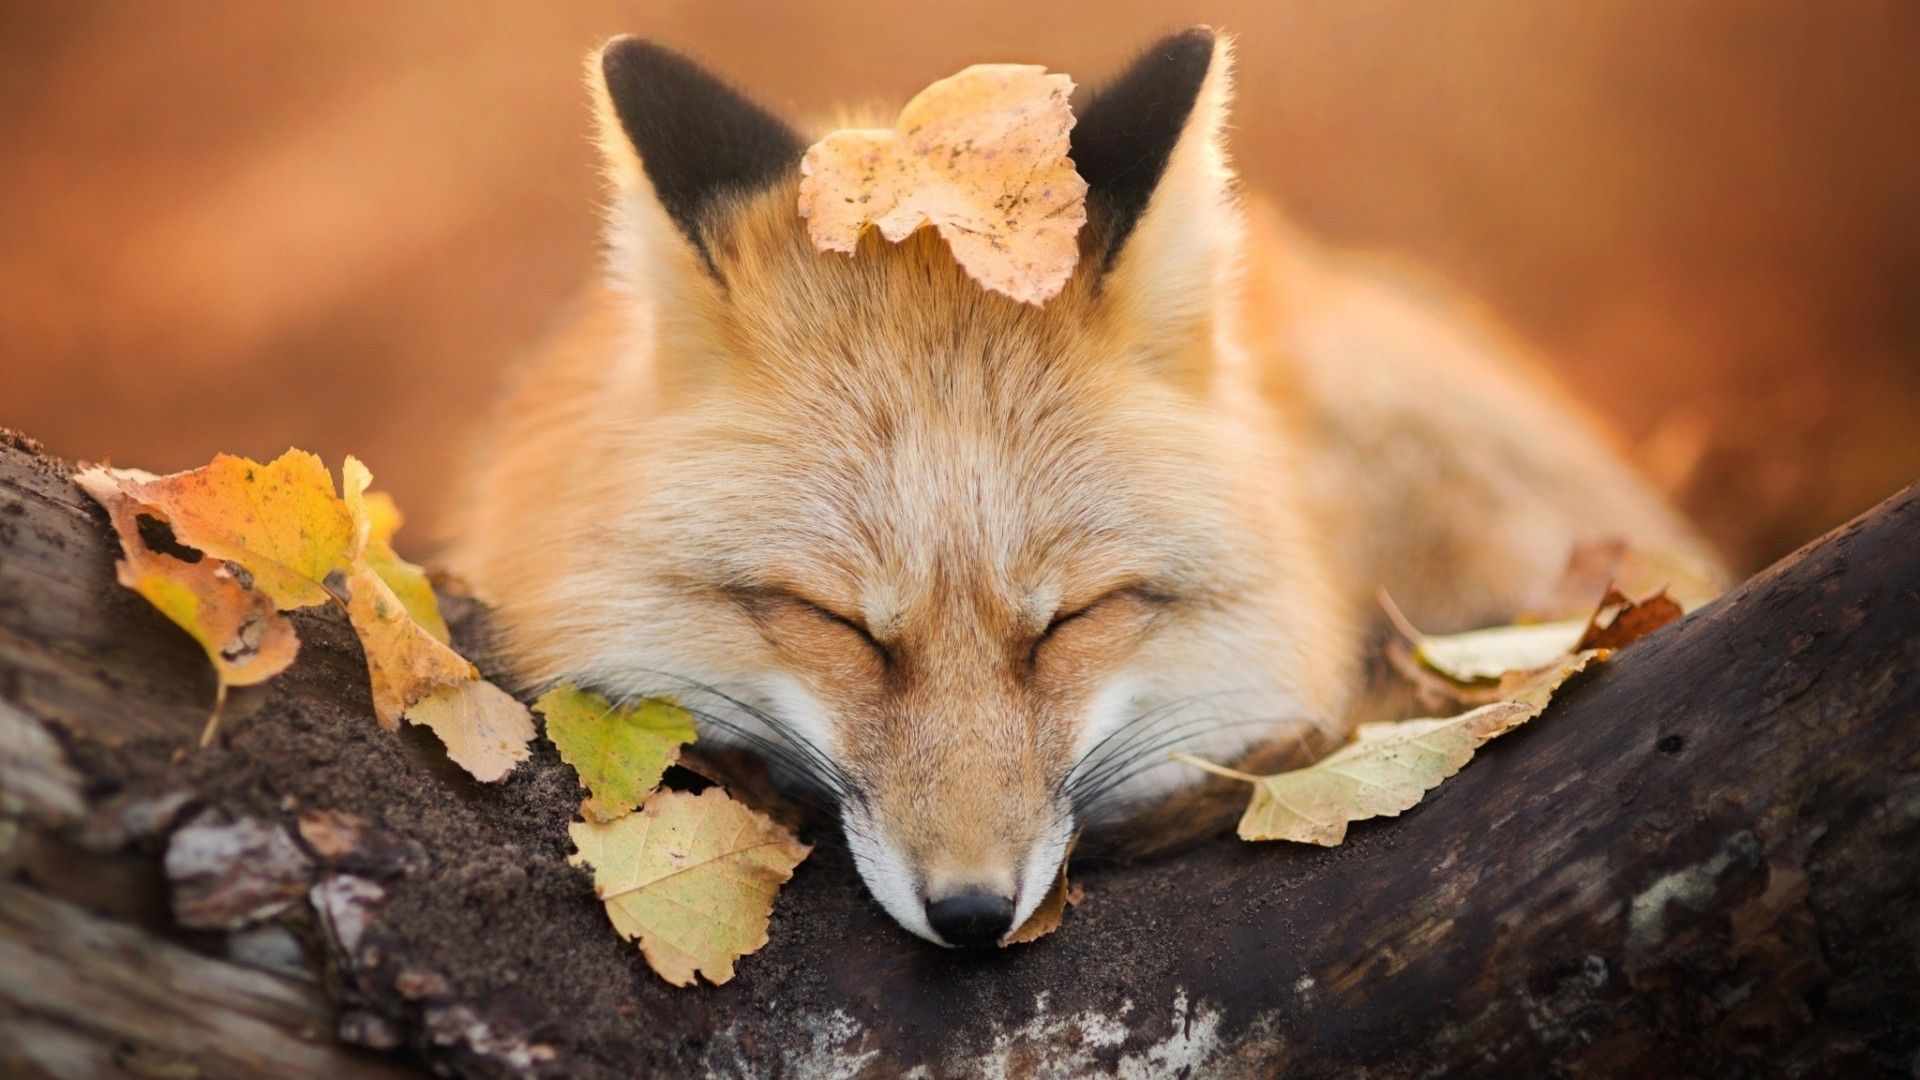 Download 1920x1080 Fox, Sleeping, Cute, Wood, Leaves, Autumn Wallpaper for Widescreen